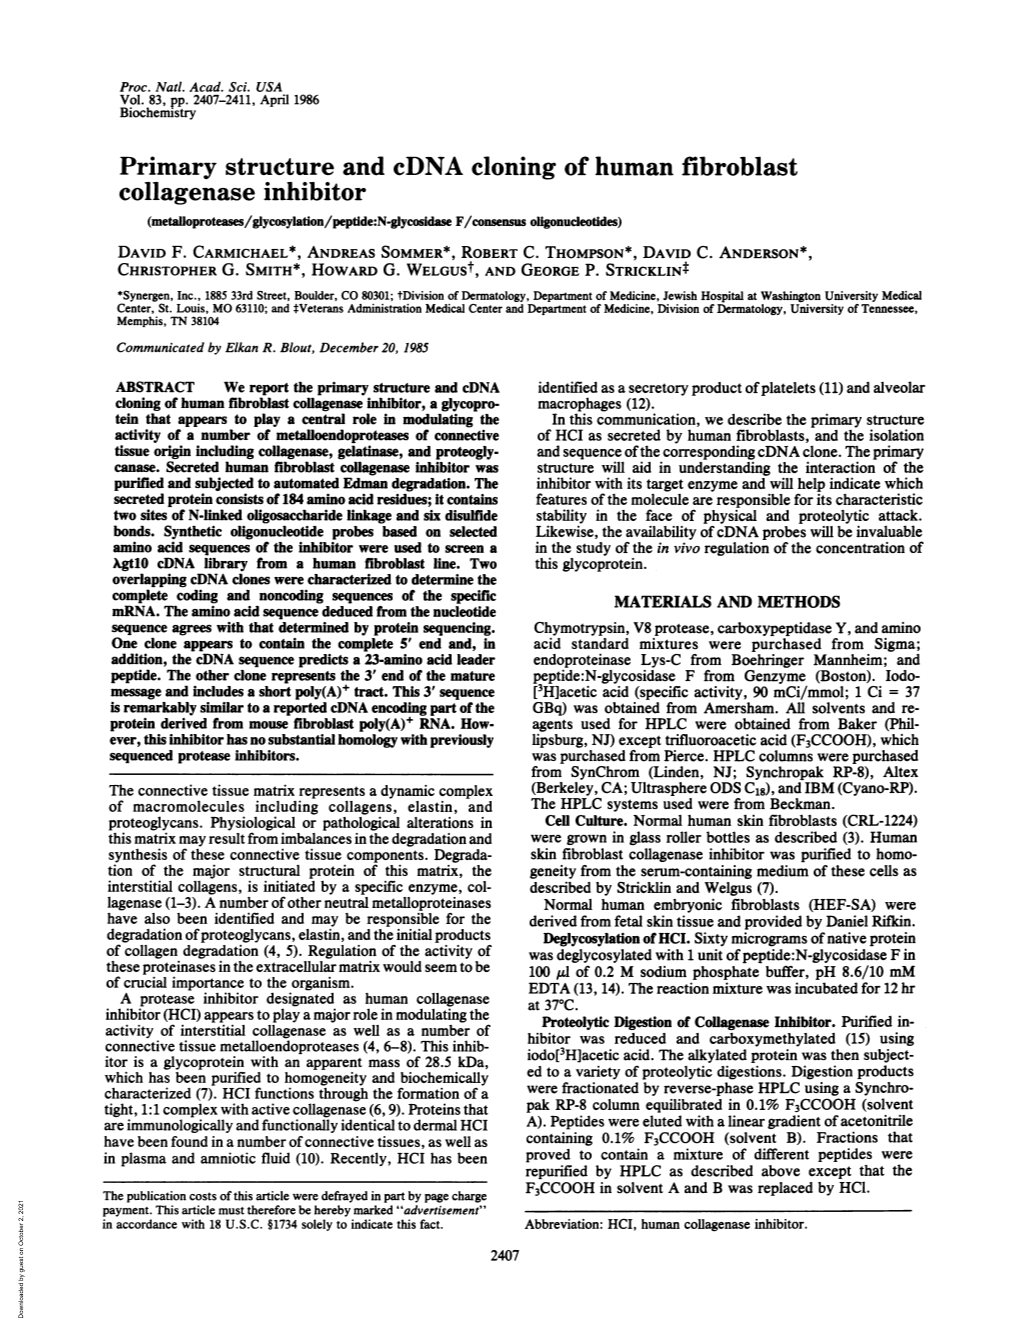 Collagenase Inhibitor (Metalloproteases/Glycosylation/Peptide:N-Glycosidase F/Consensus Oligonudeotides) DAVID F